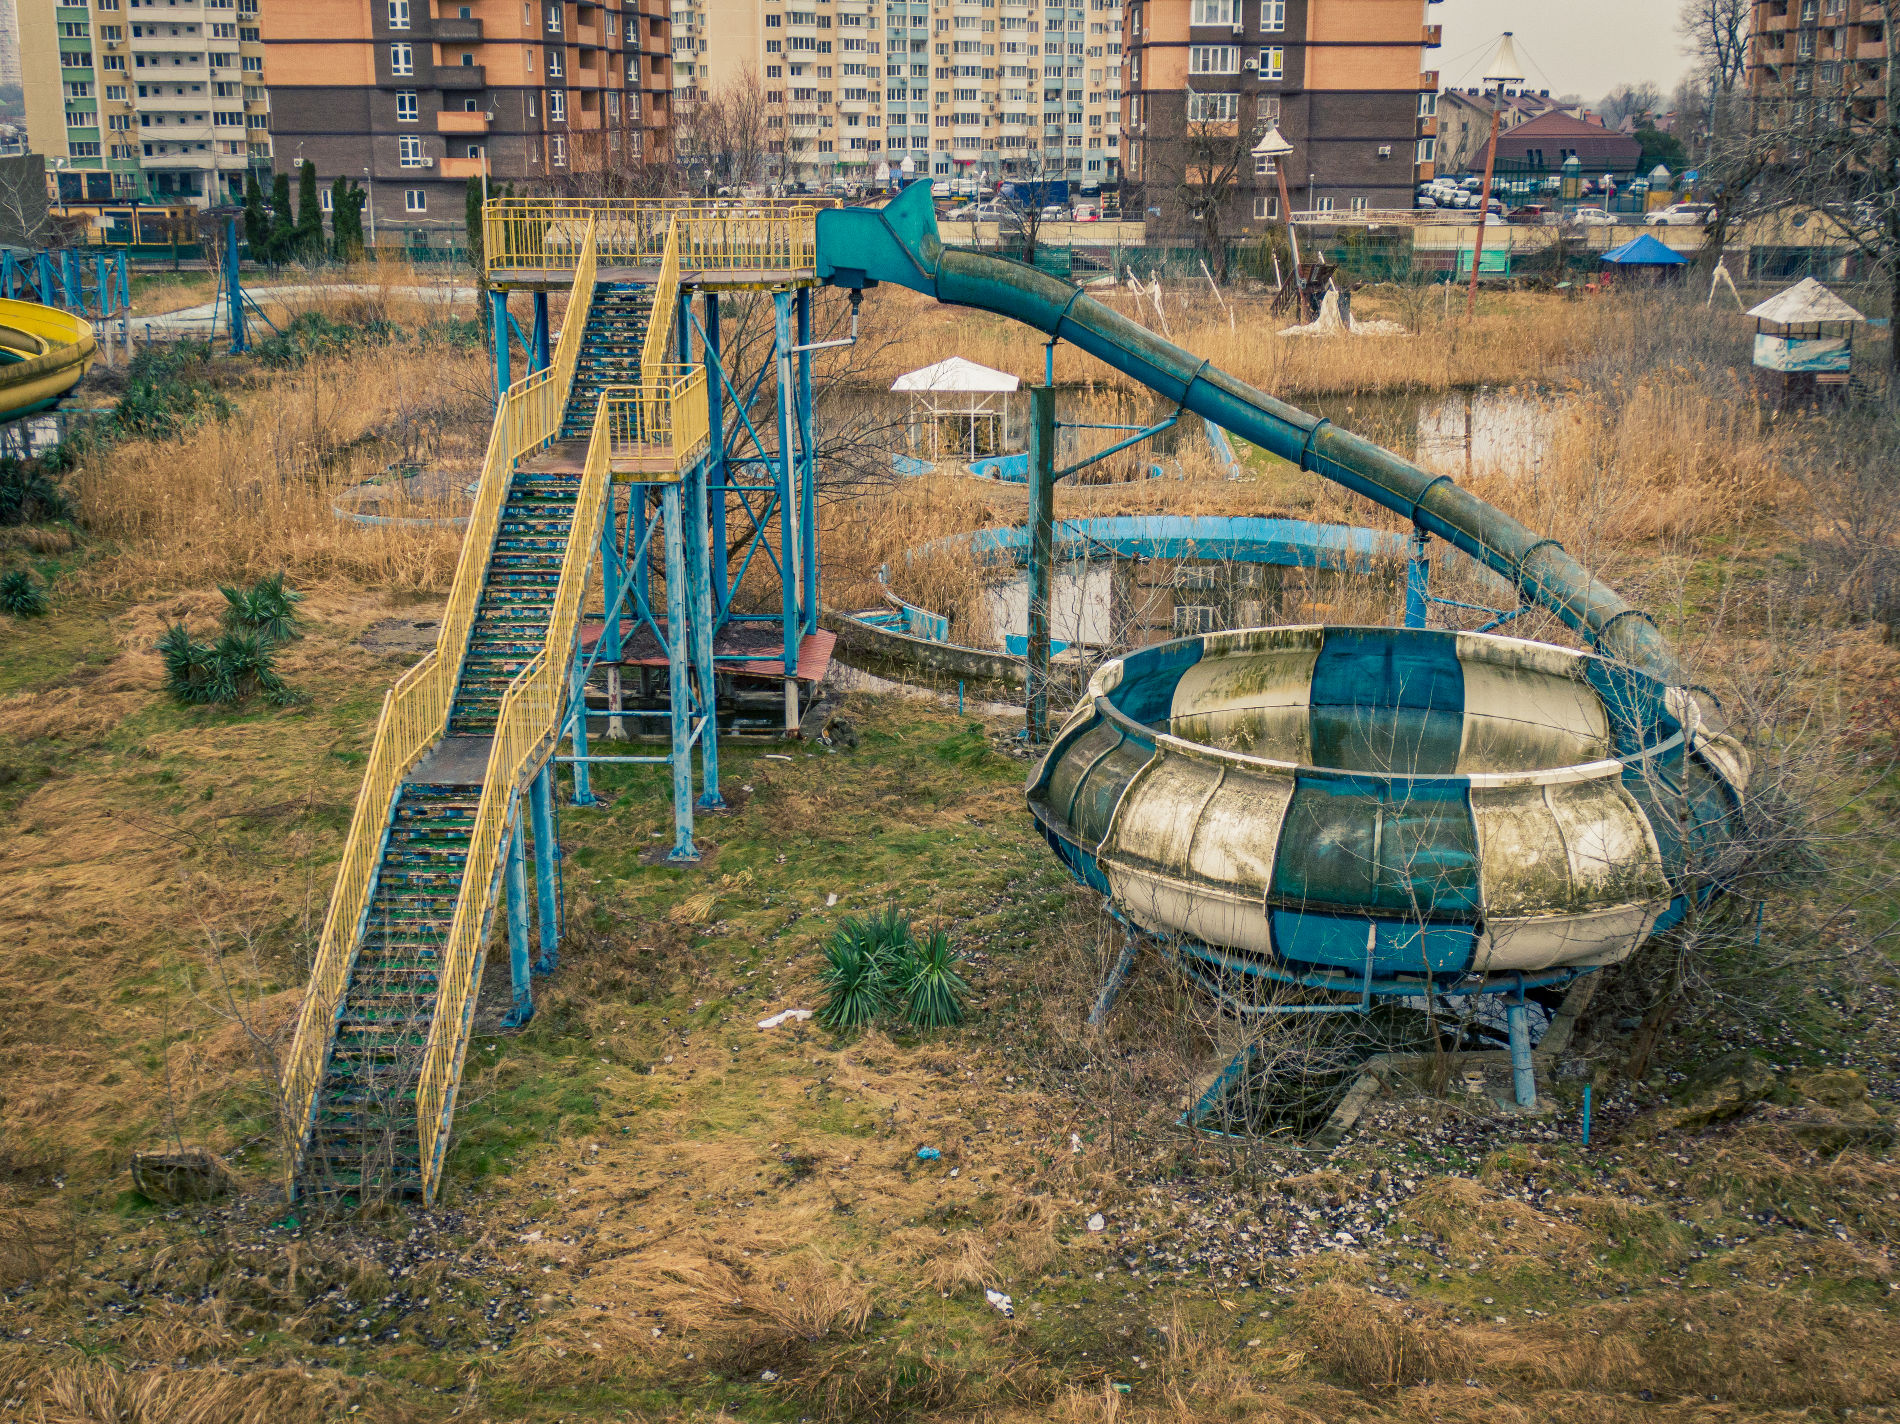 Аттракцион «Камикадзе» в заброшенном авкапарке «Экватор» © Фото Антона Быкова, Юга.ру